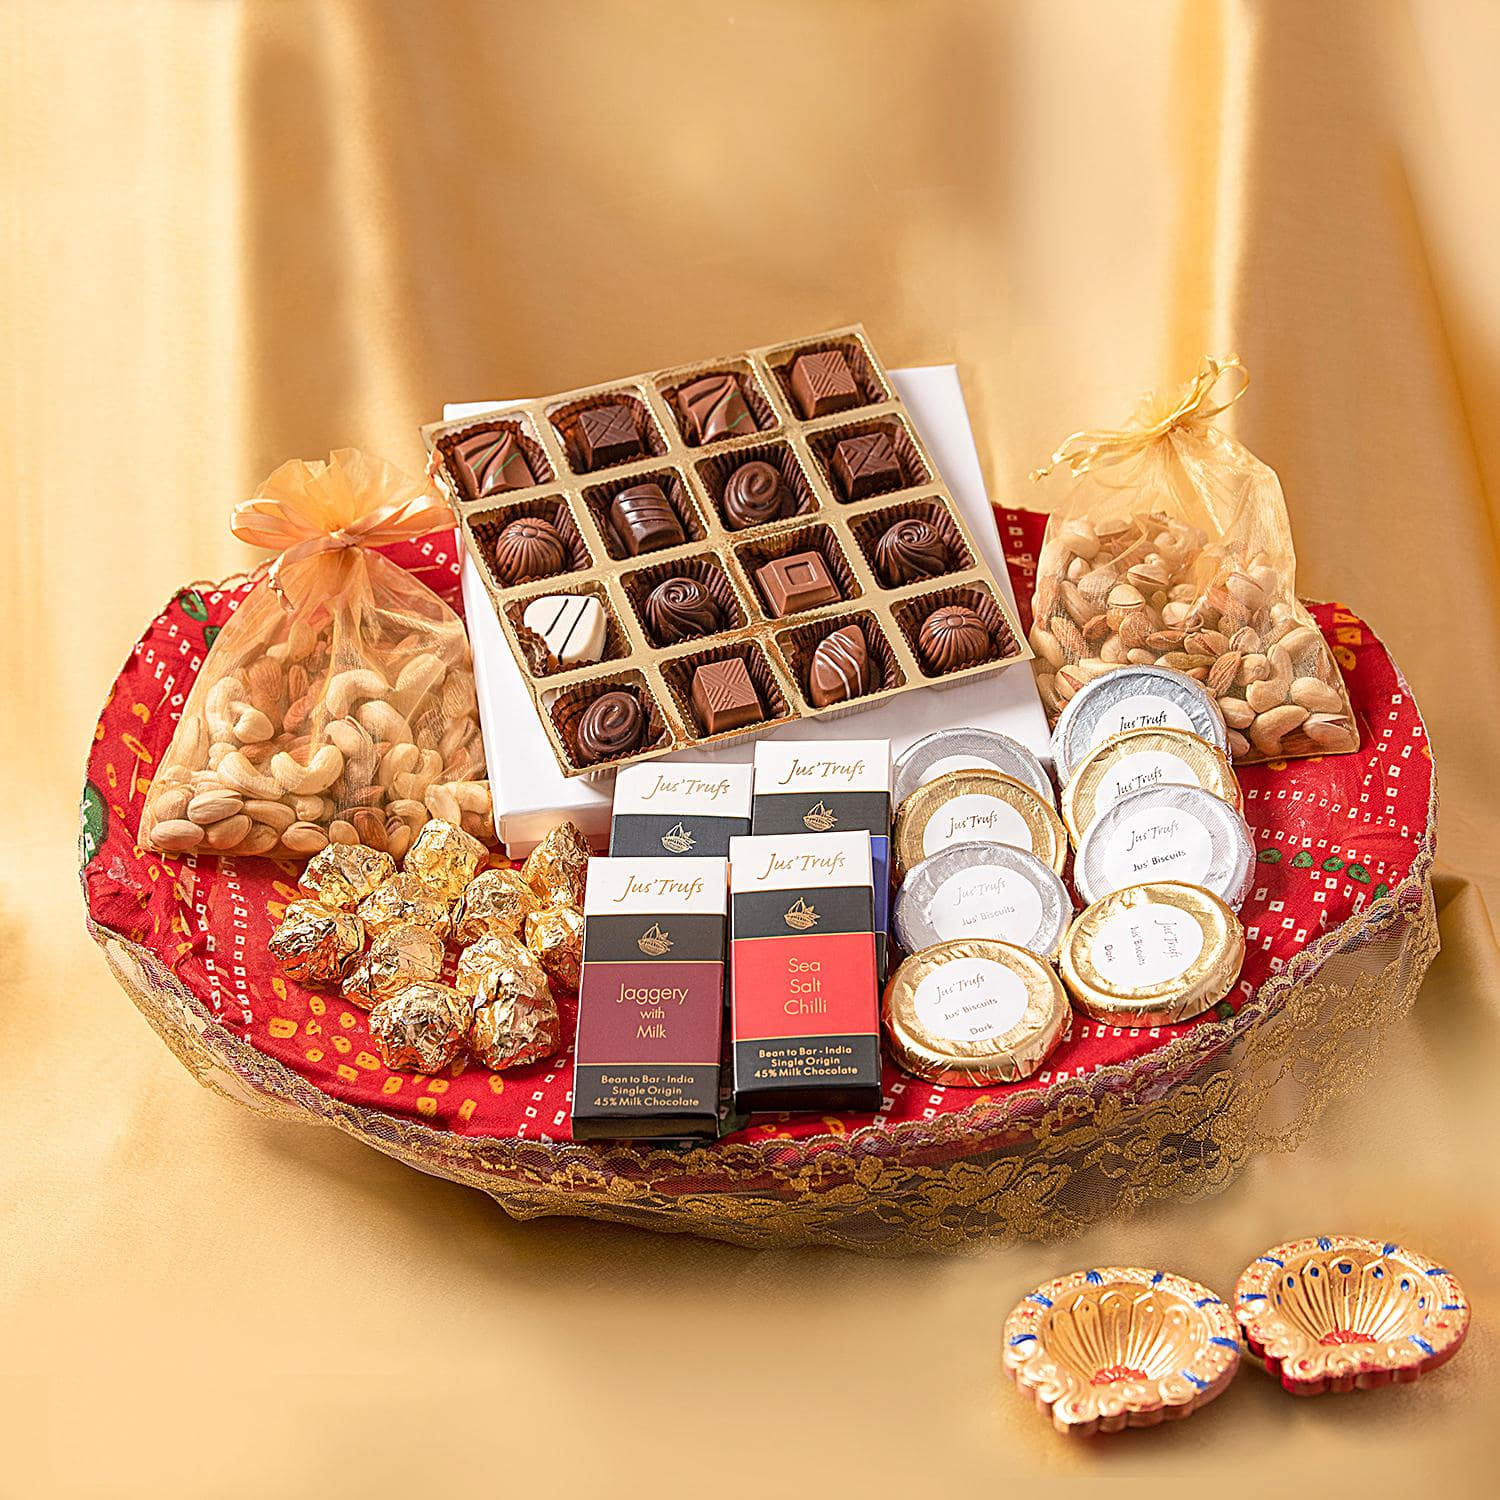 Details more than 152 chocolate gift hampers for diwali - kidsdream.edu.vn